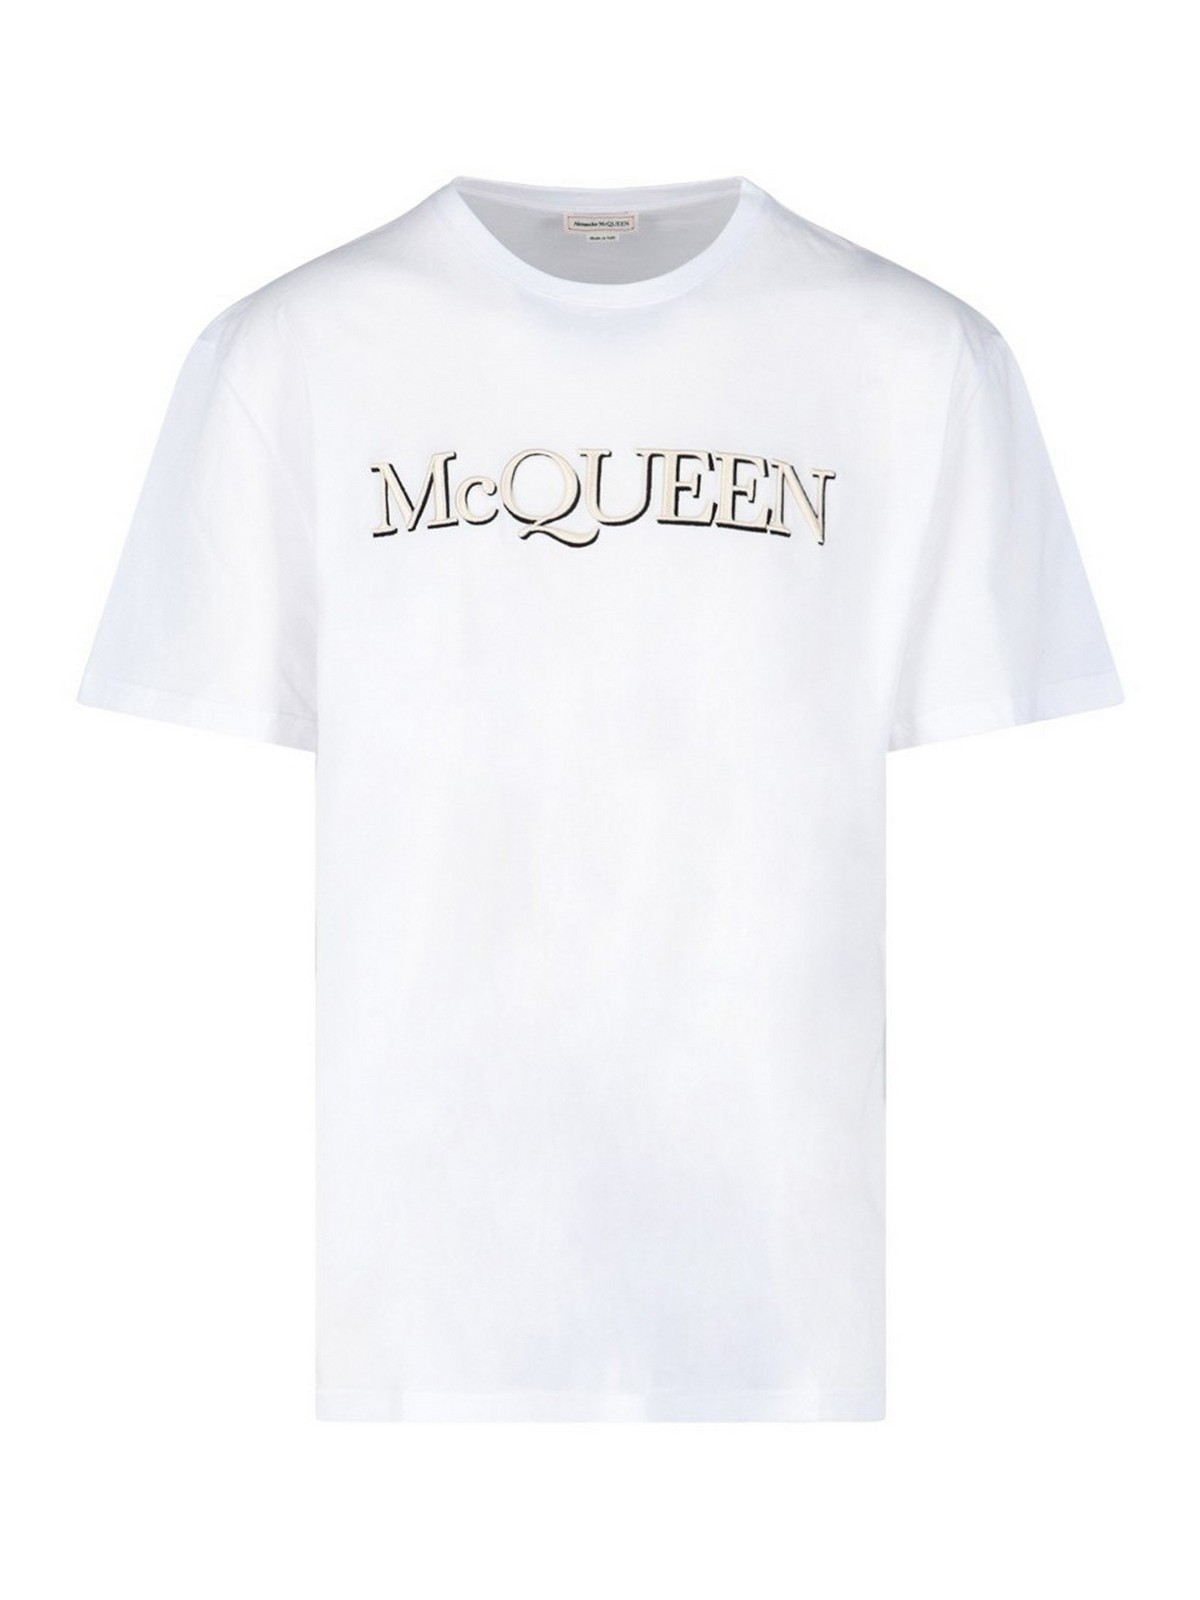 Alexander Mcqueen Camiseta - Blanco